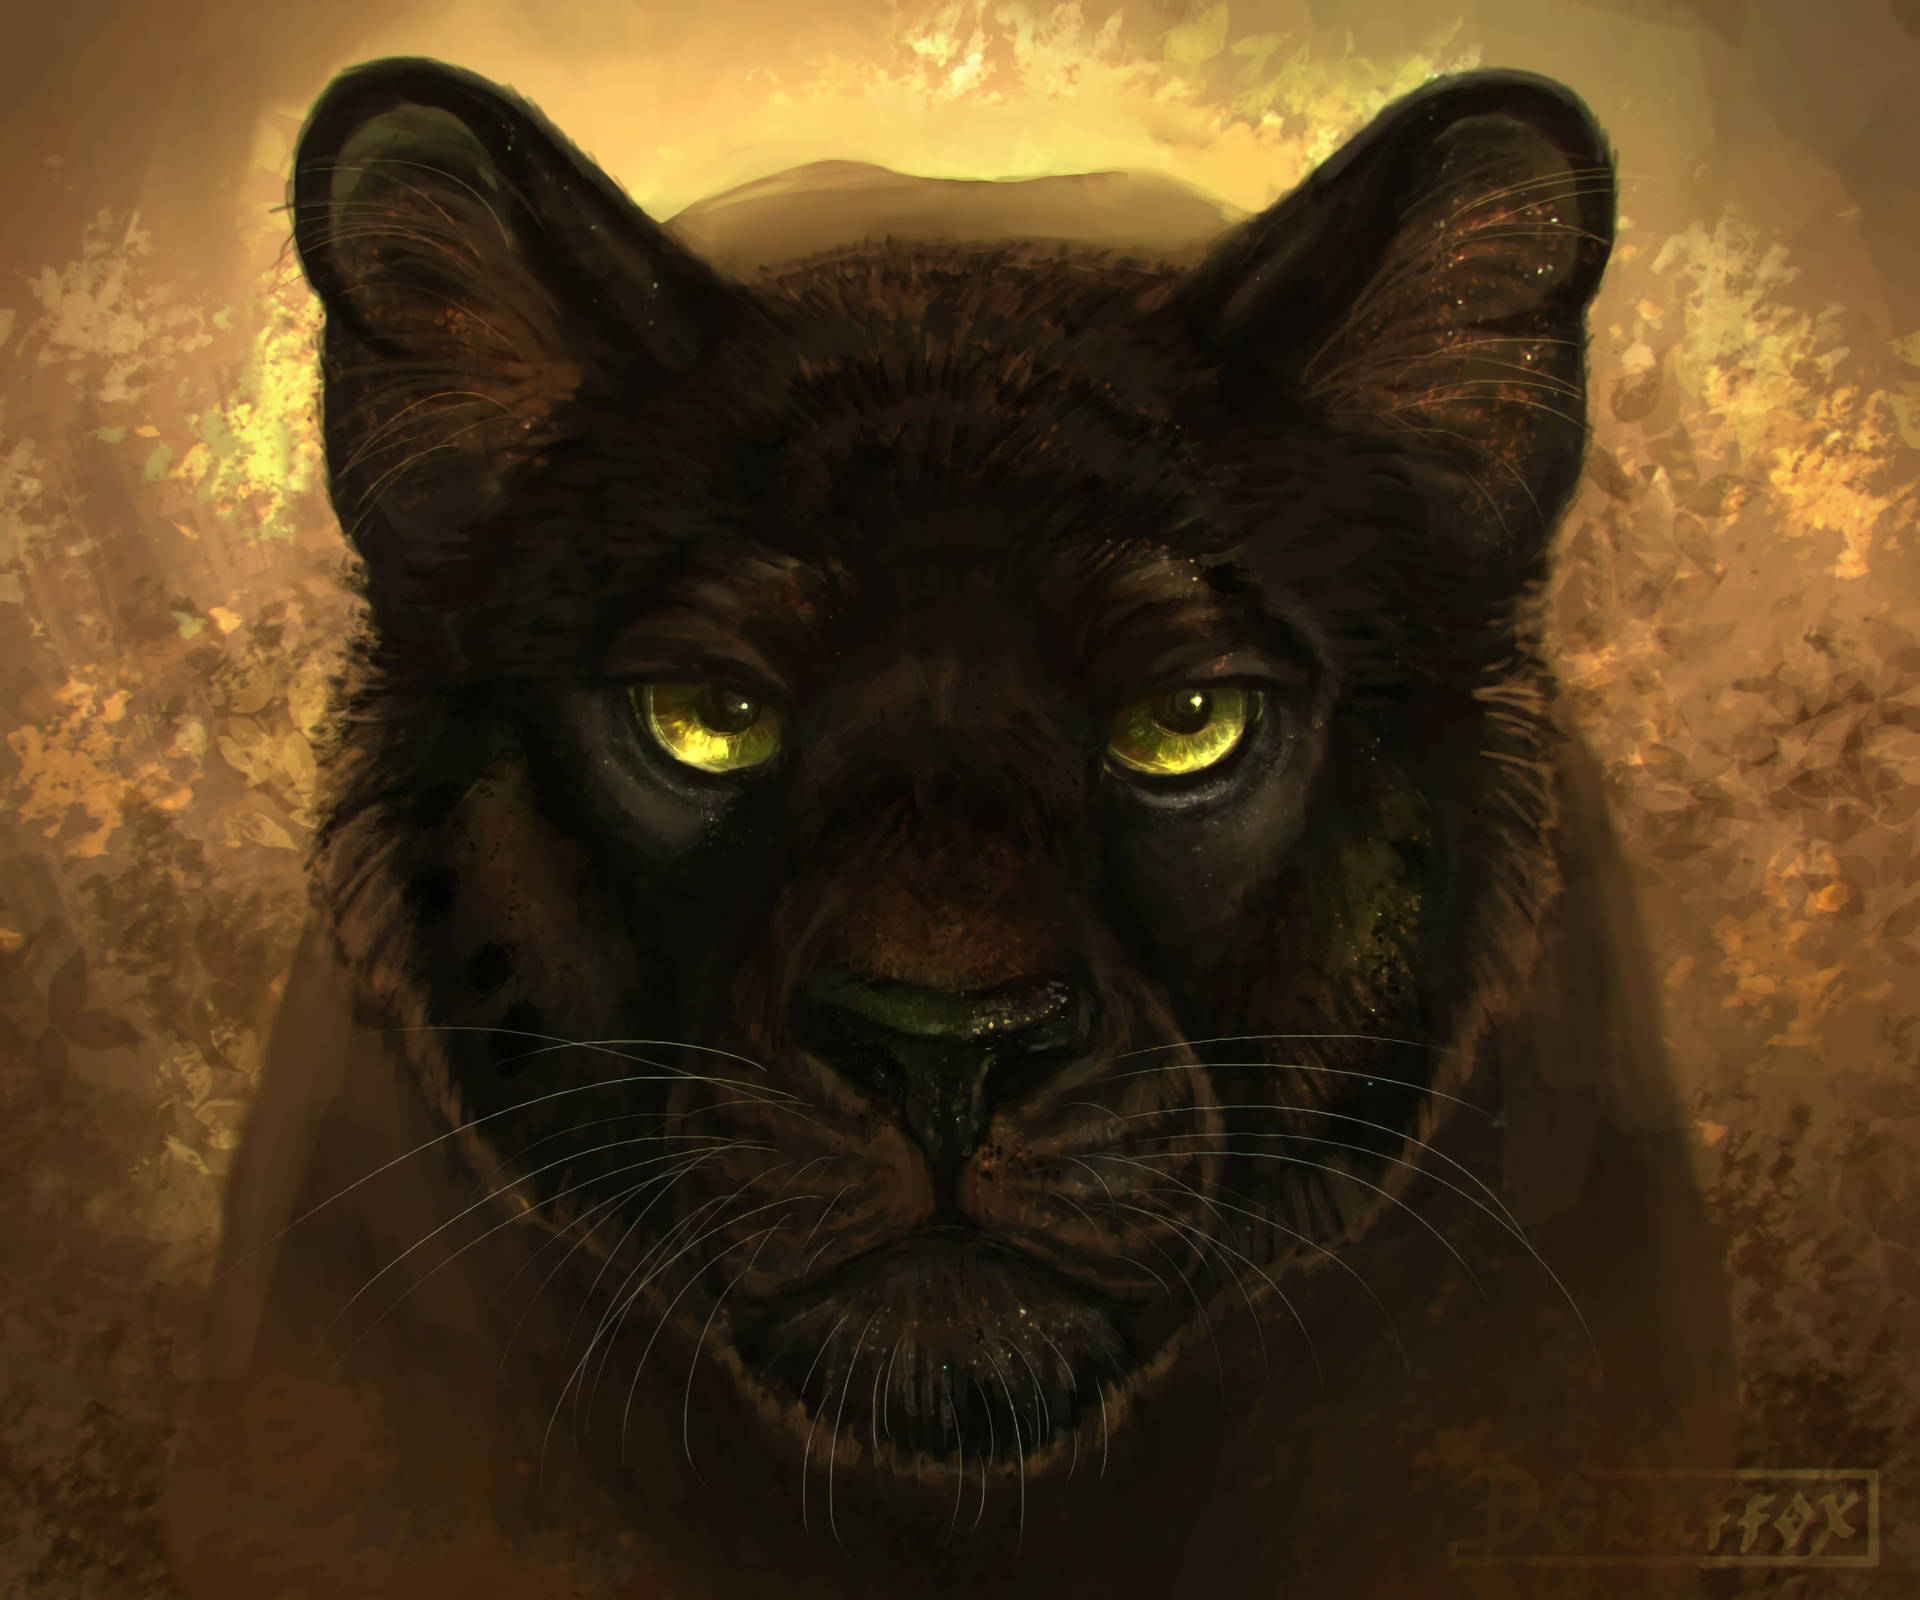 Black Panther Painting